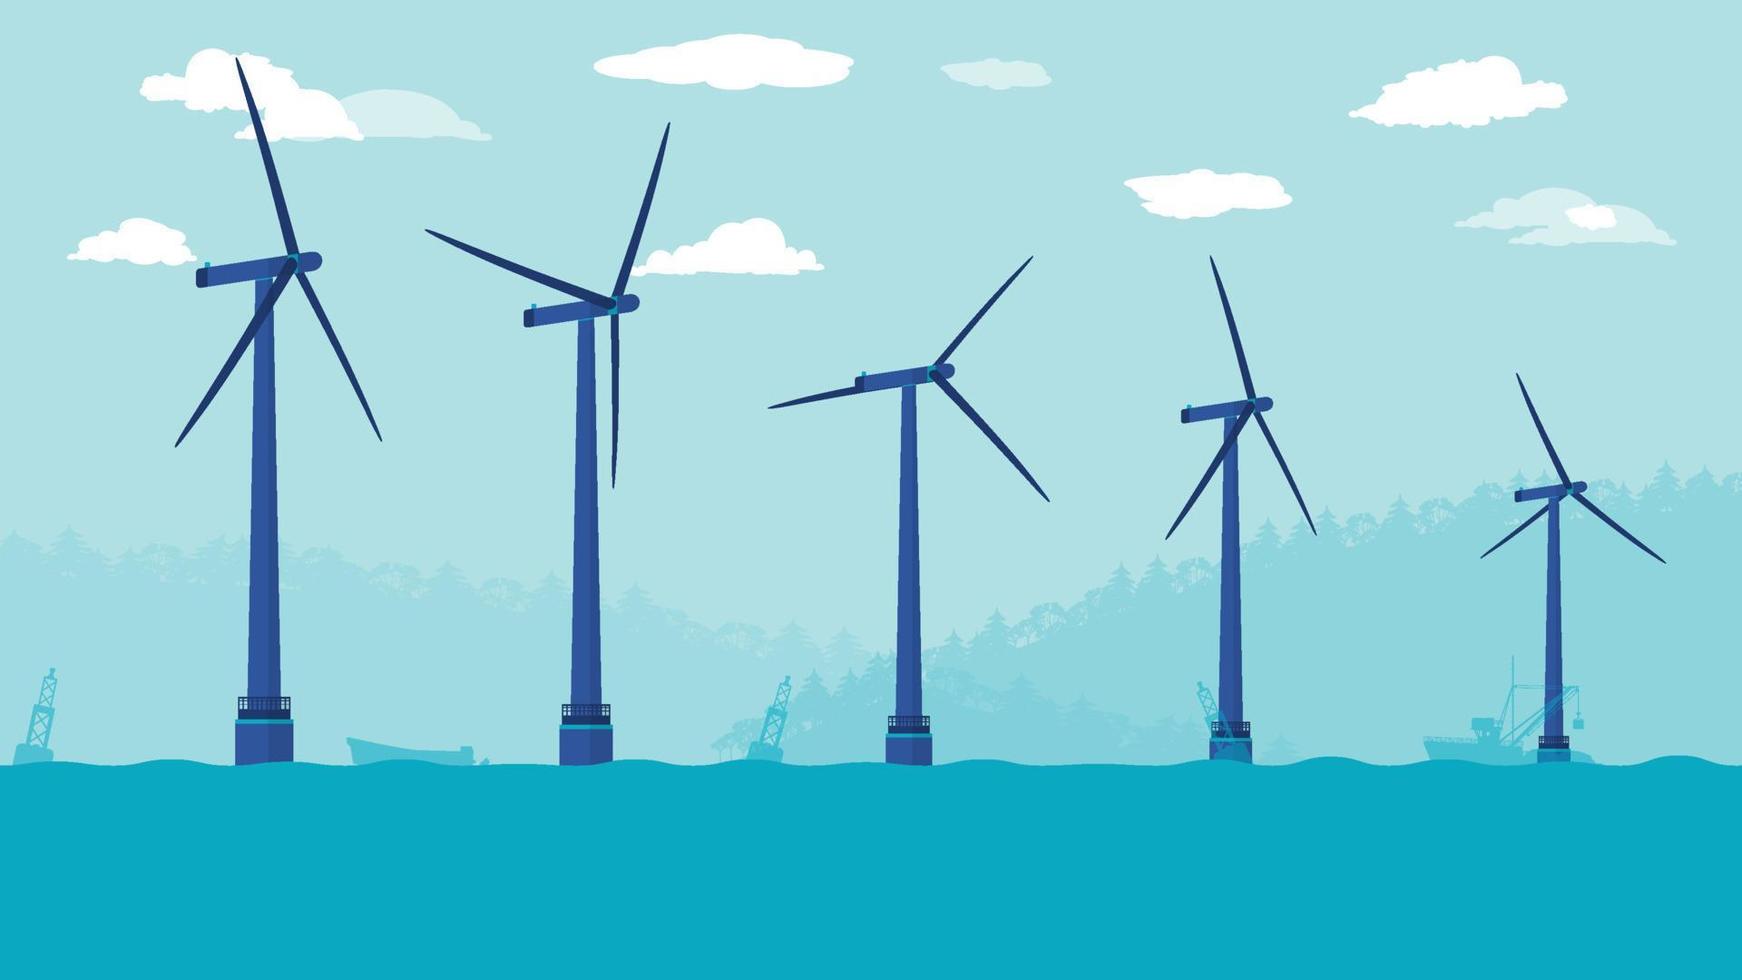 flache karikaturseitenansicht des offshore-windturbinenparks am ozean oder meer vektor